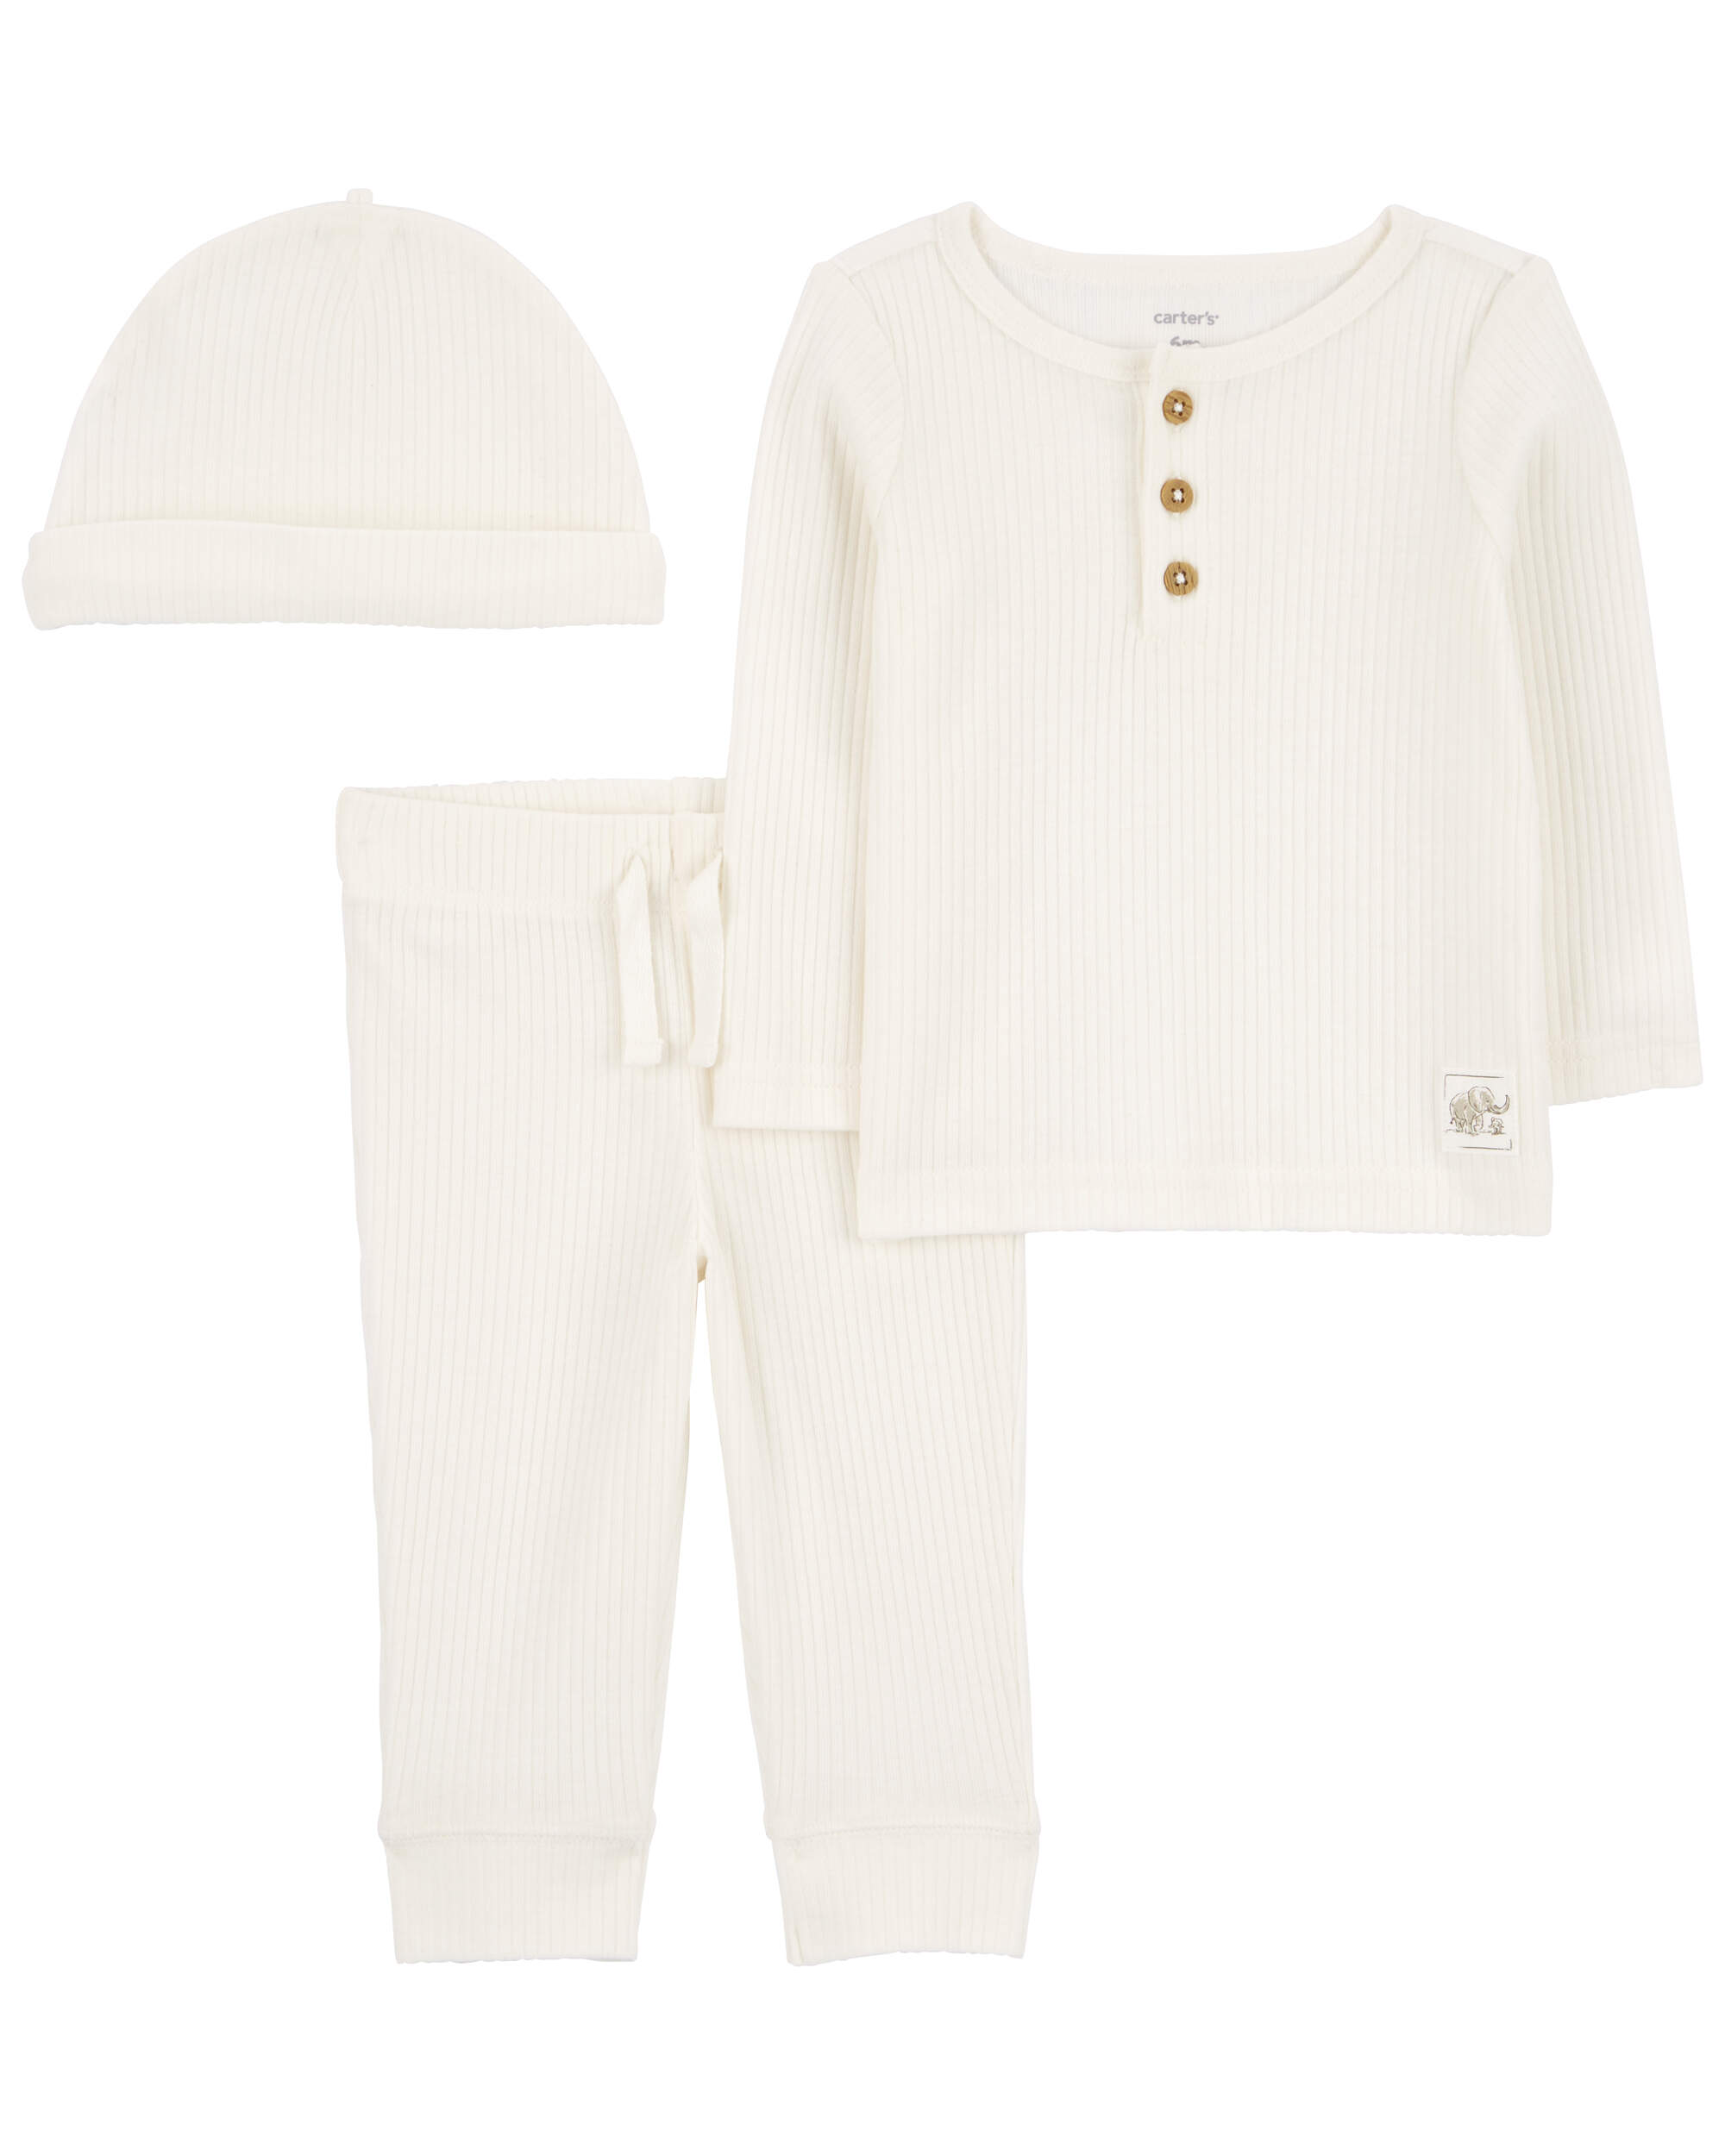 Baby 3-Piece Cotton Blend Outfit Set